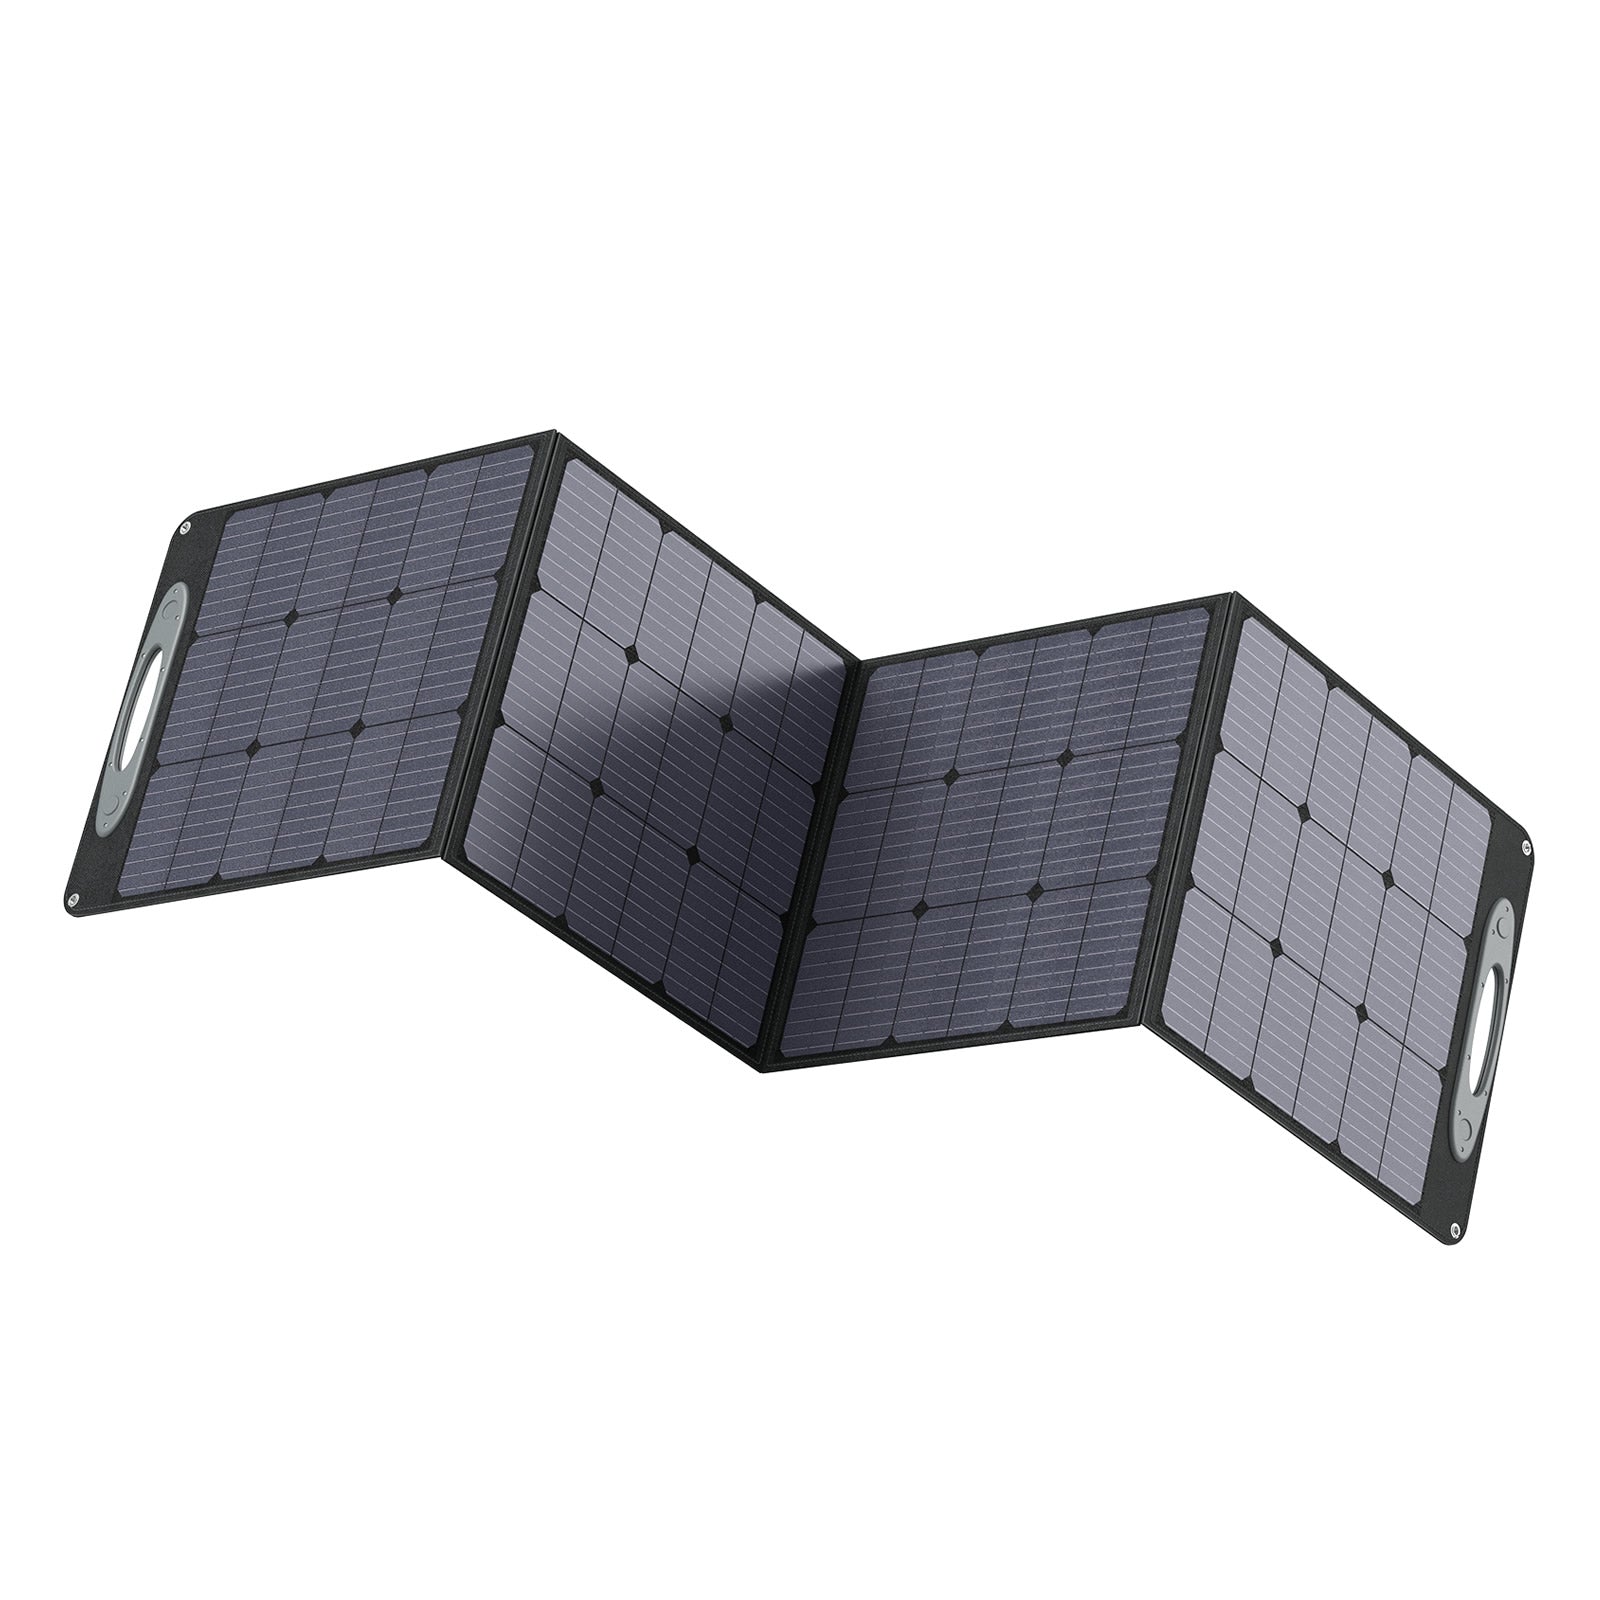 FFpower 200W Portable Solar Panel